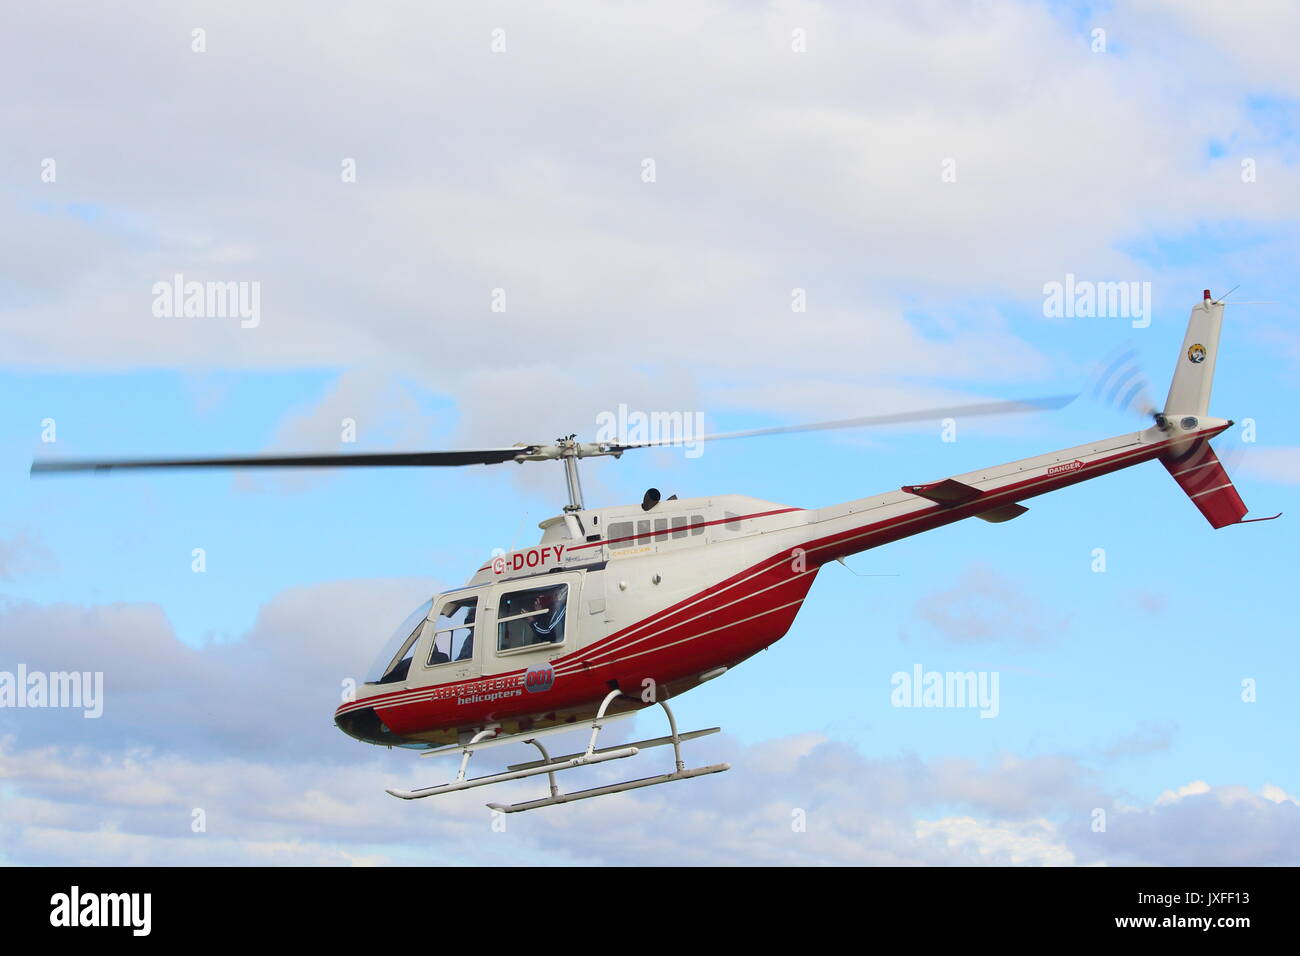 DOFY Bell Jet Ranger 206 Helicopter once owned by the Duchess of York, Sarah Ferguson. Stock Photo